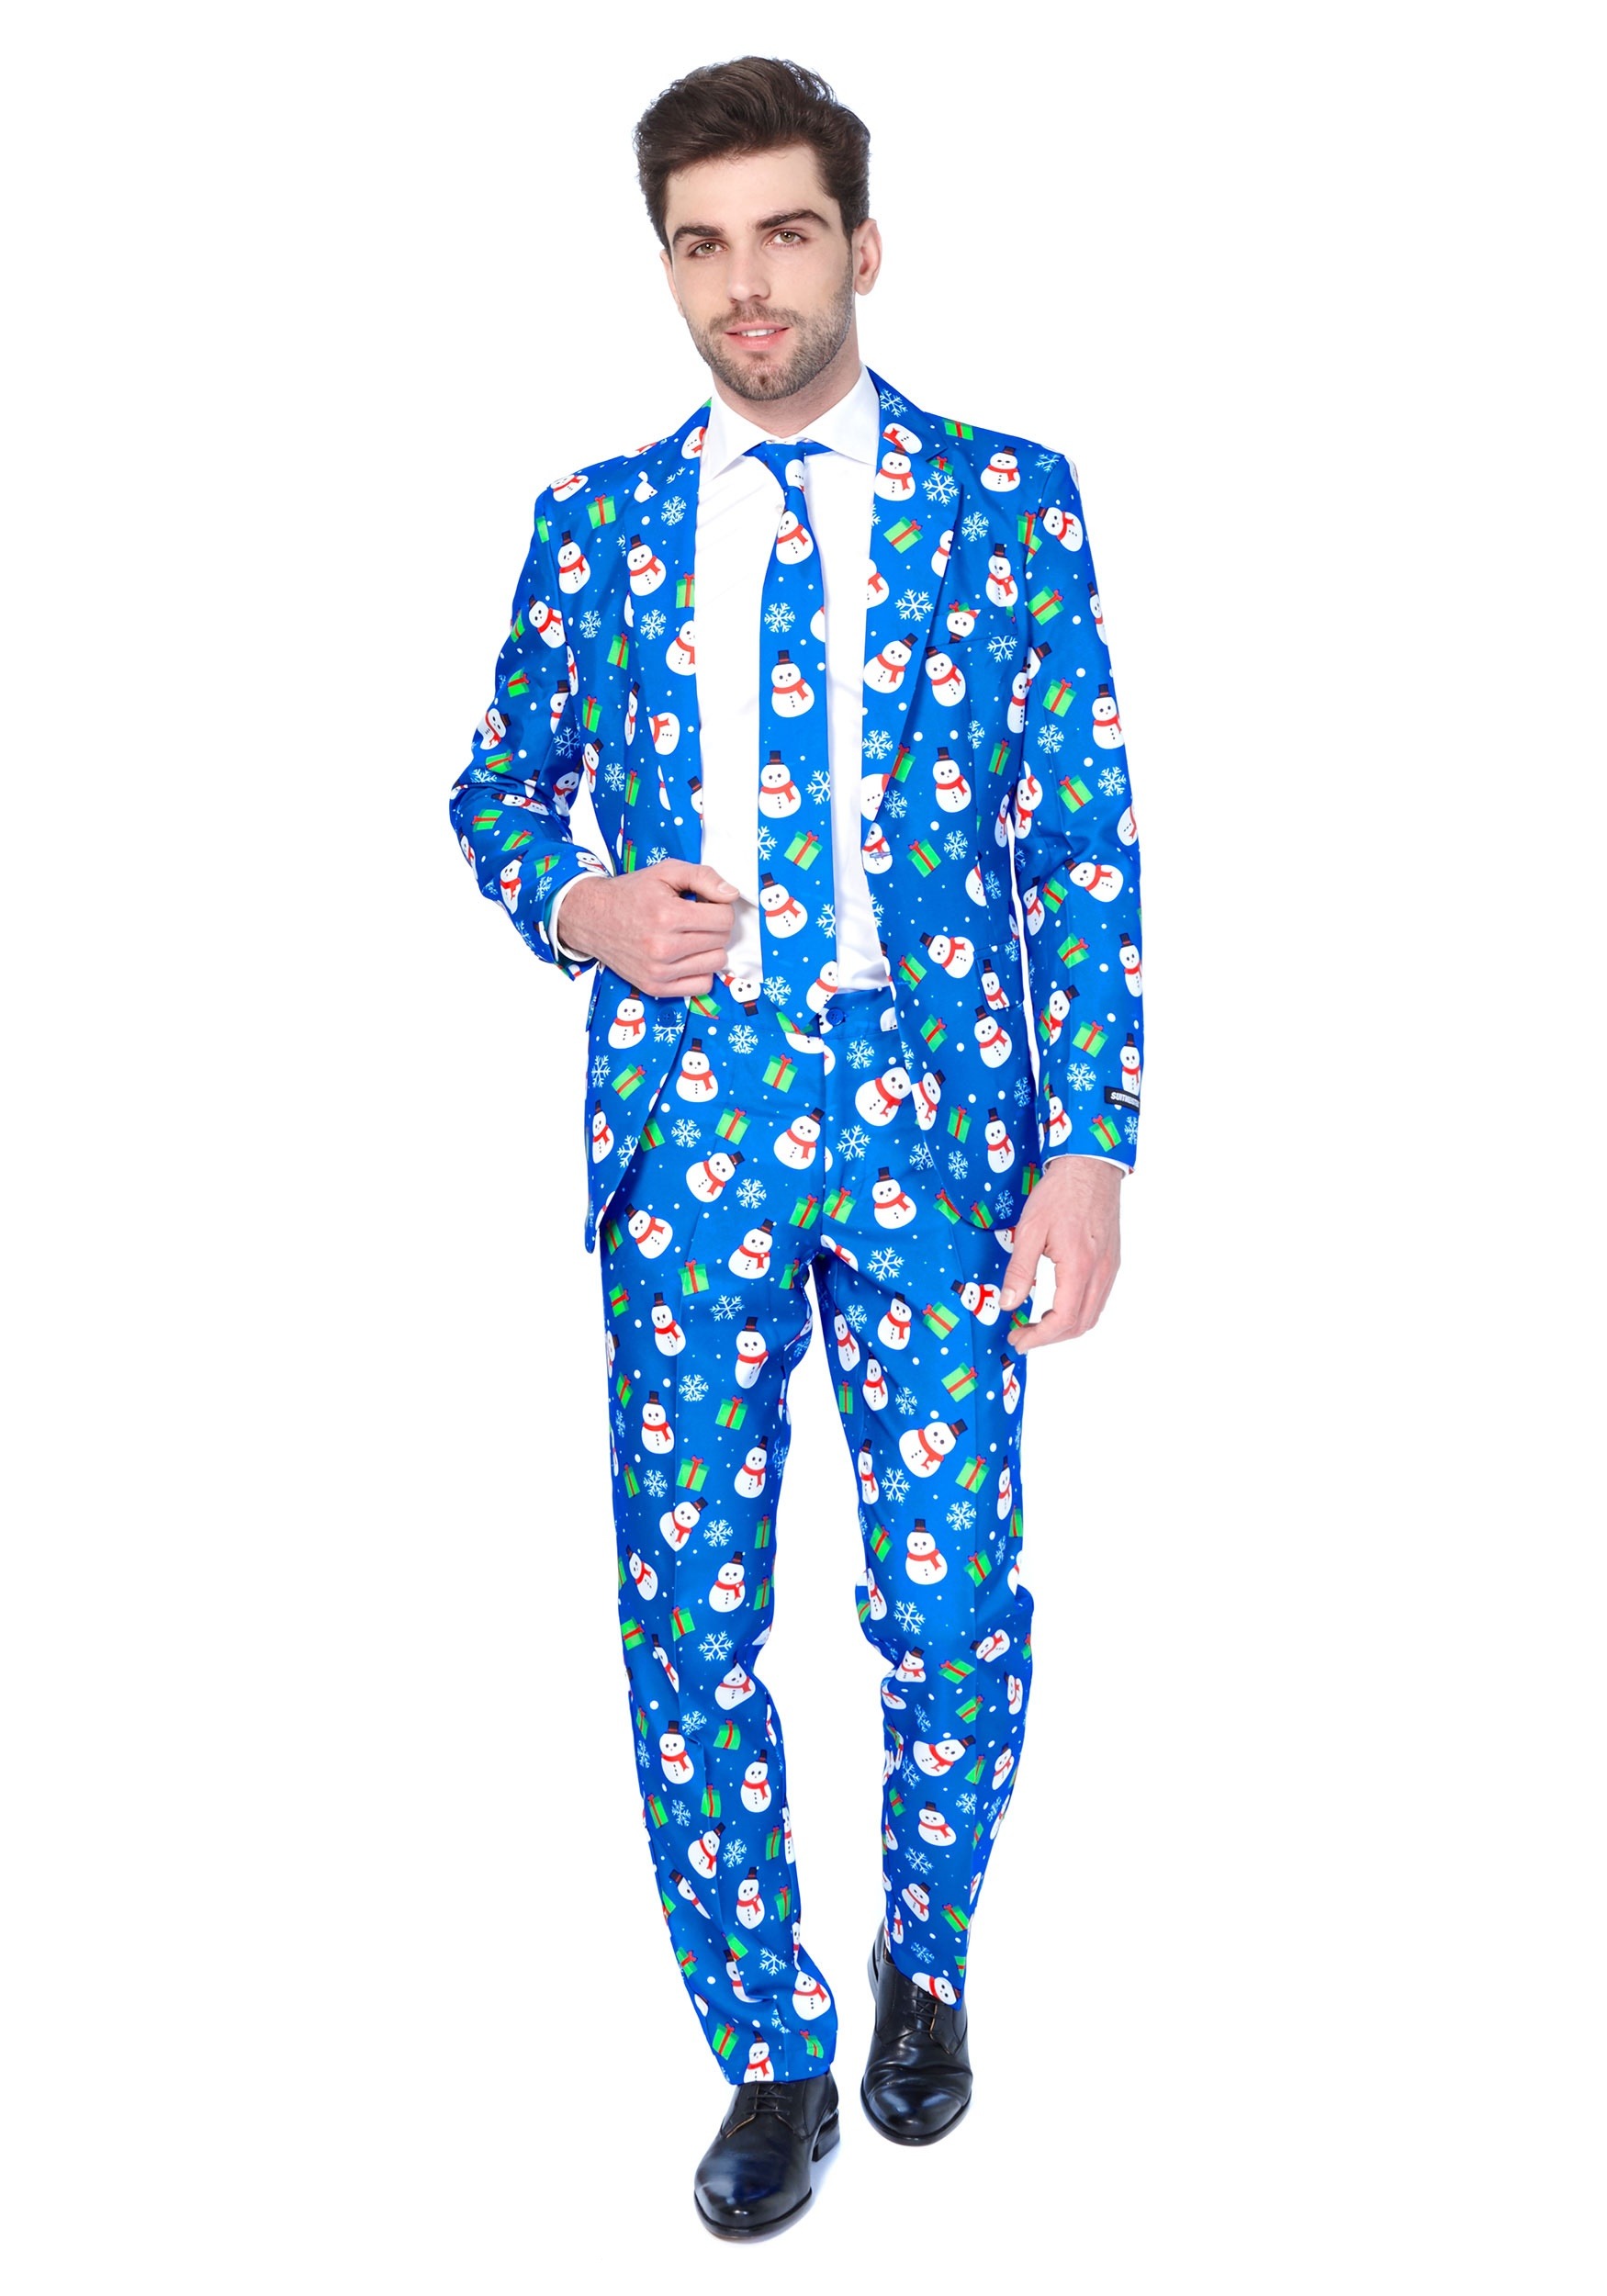 Image of Men's Blue Snowman Suitmeister Suit ID OSOBAS0031-L